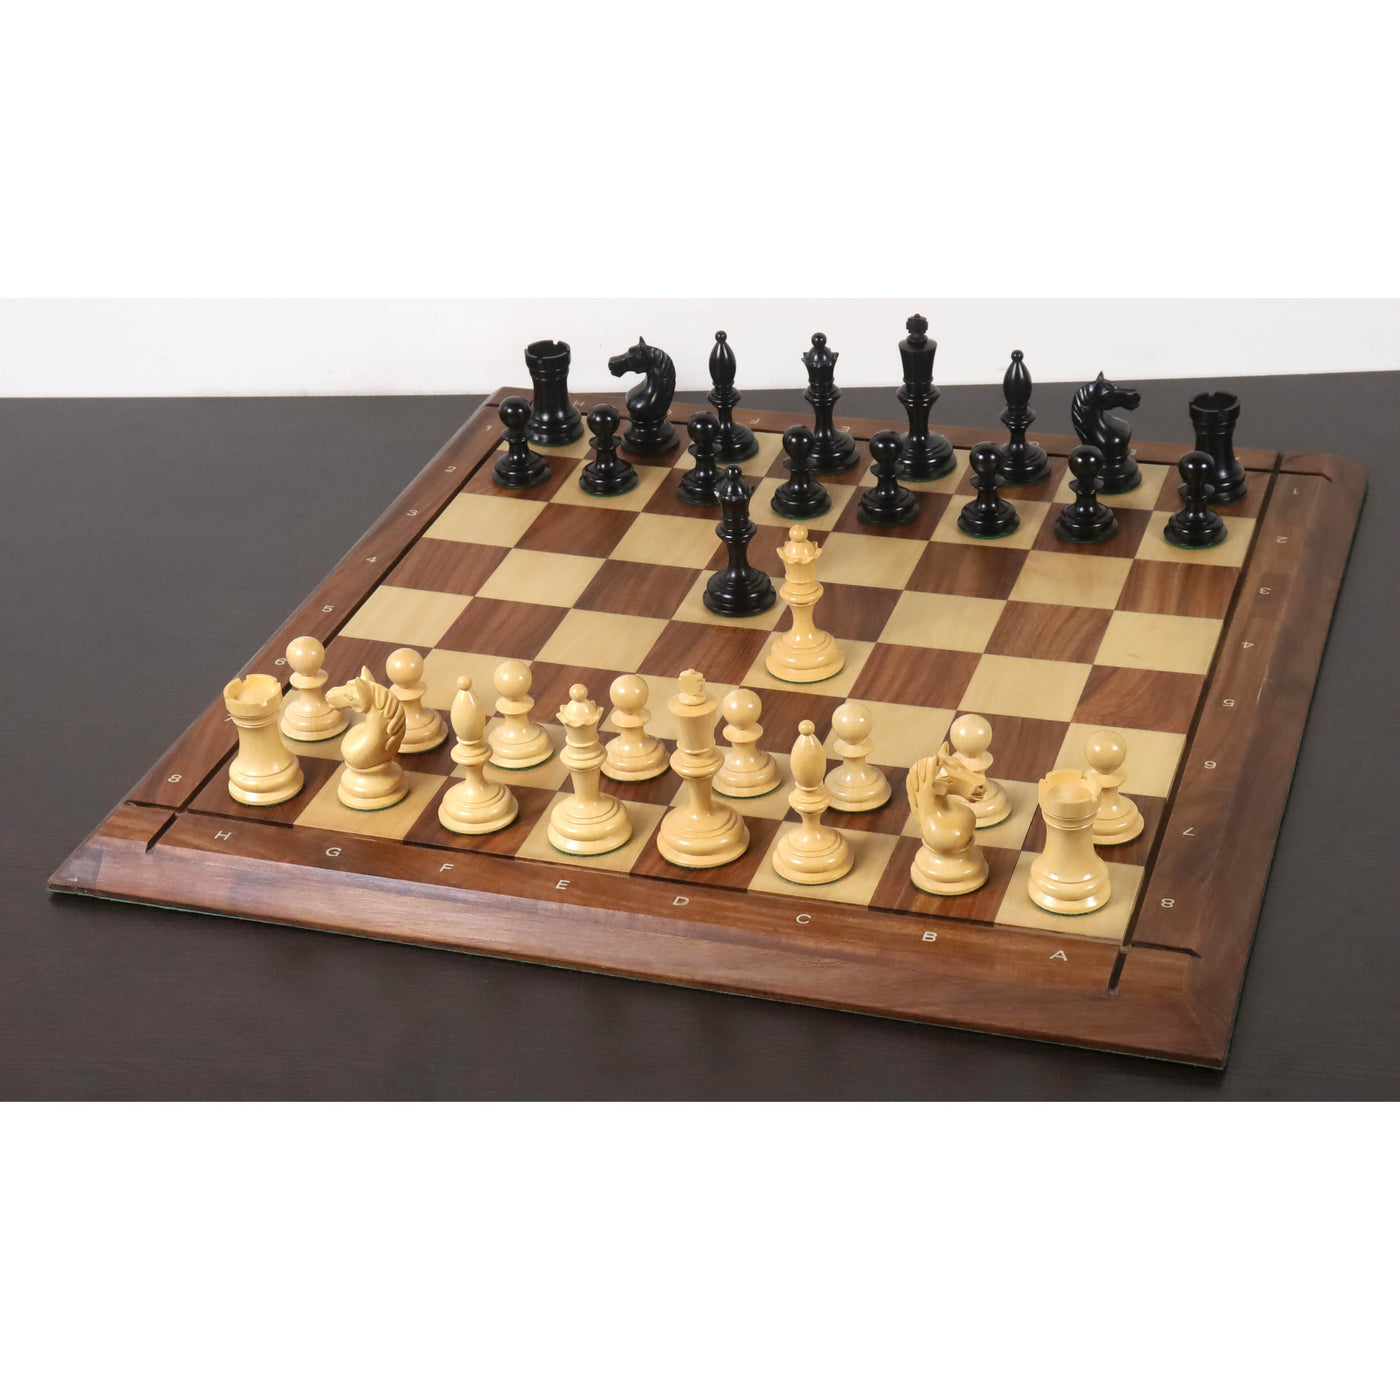 1933 Botvinnik Flohr-I Soviet Chess Set - Chess Pieces Only -Ebonised Boxwood- 3.6" King